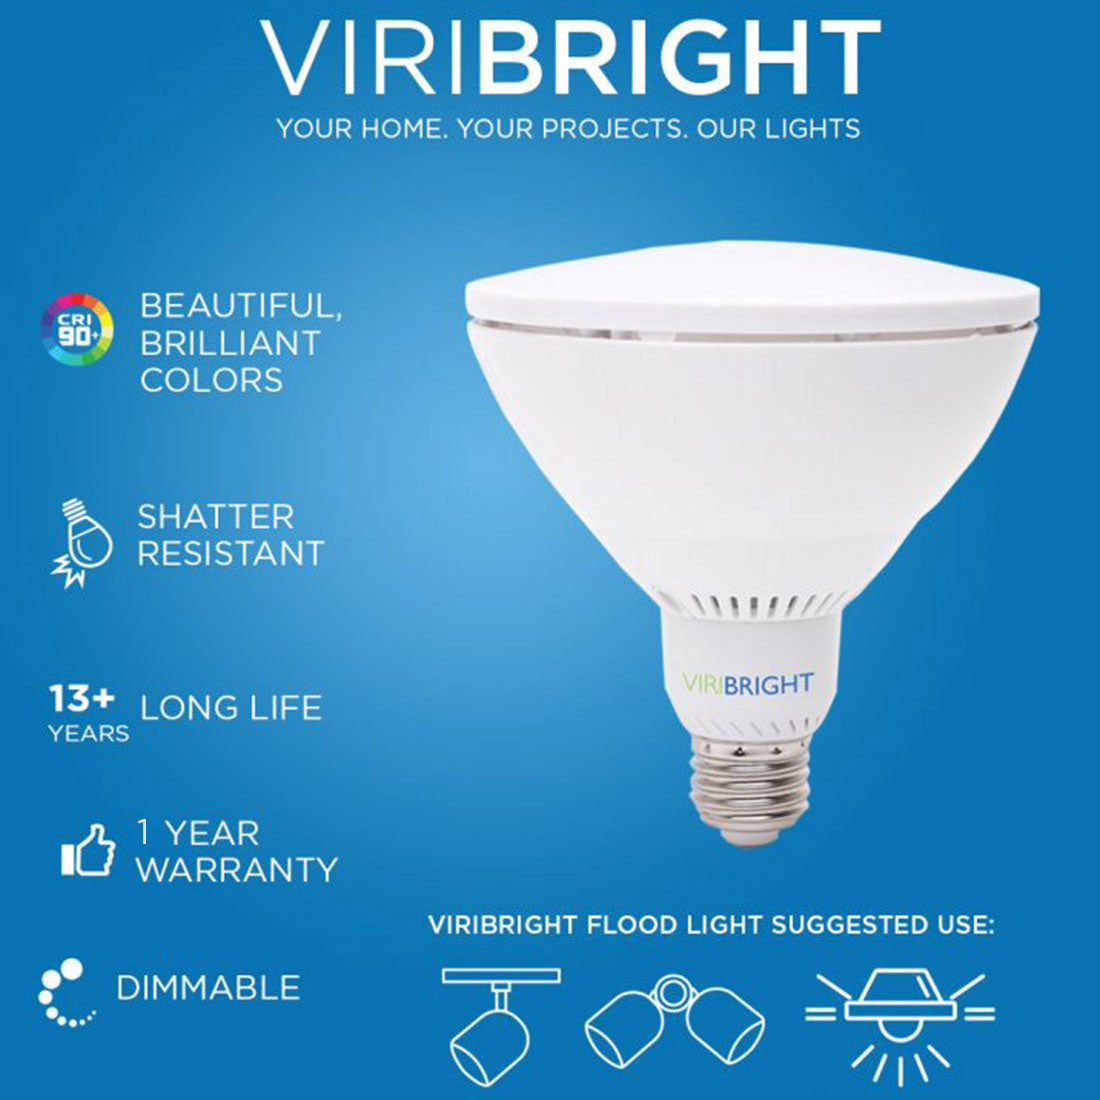  75 Watt Equivalent PAR38 E26 LED Flood Light Bulb